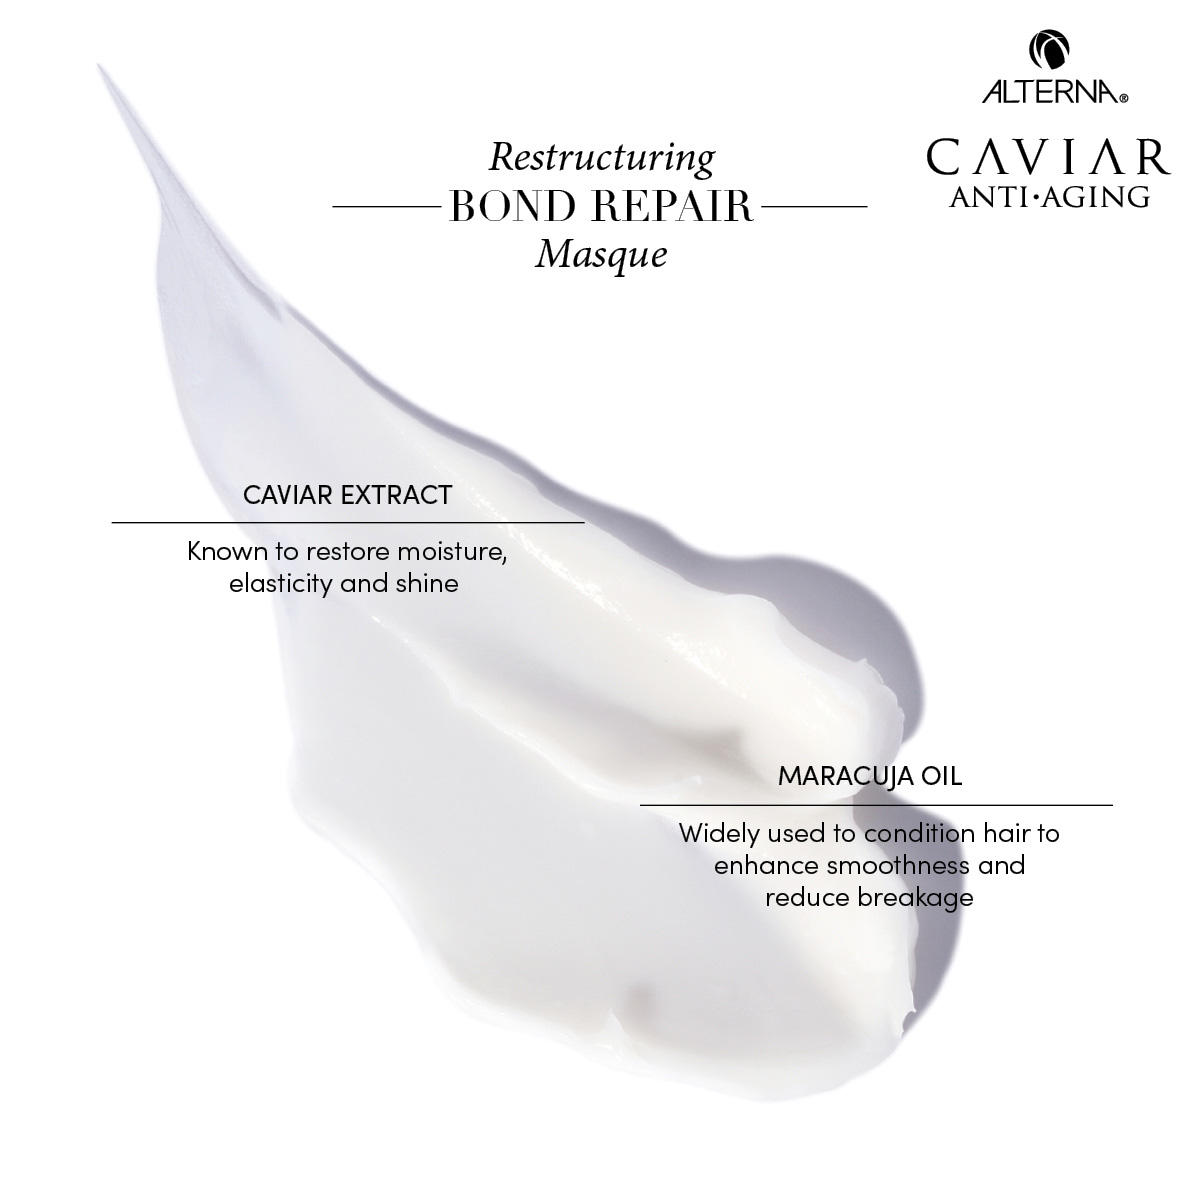 Alterna Caviar Anti-Aging Restructuring Bond Repair Mask 169 g - 4